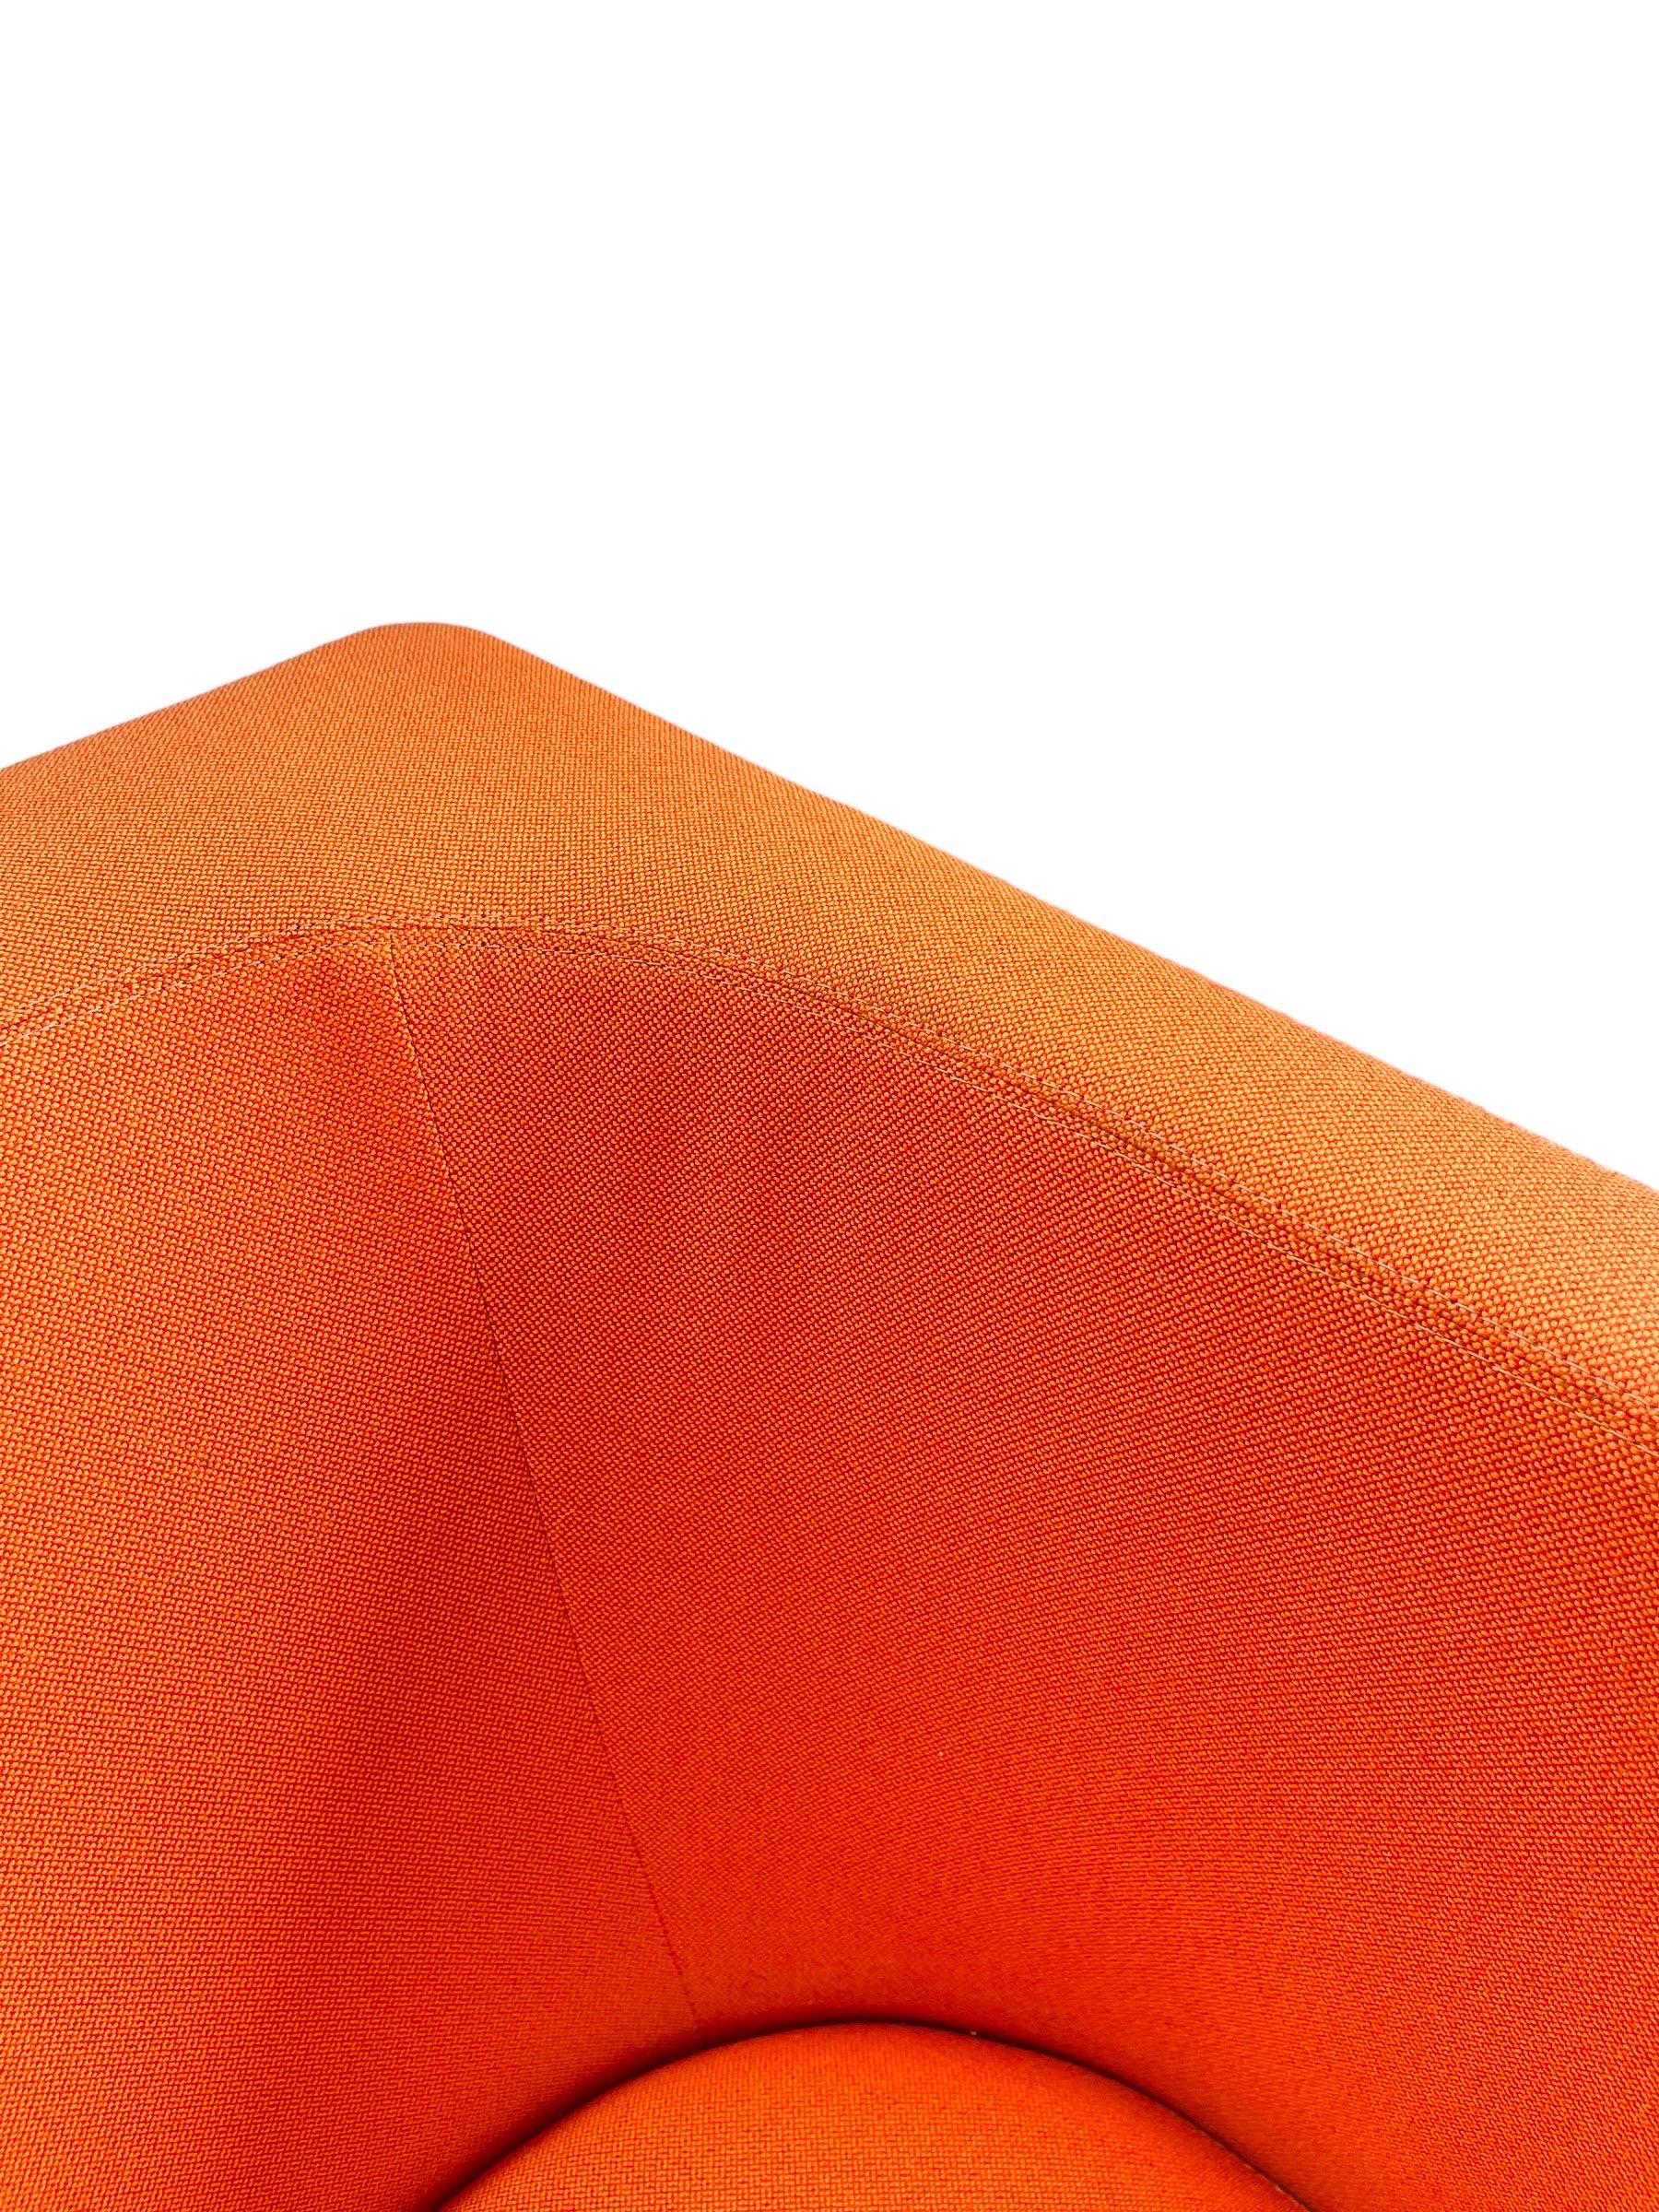 Steelcase Bivi Rumble Seat Collection: Vibrant Orange Modern Sofa 4